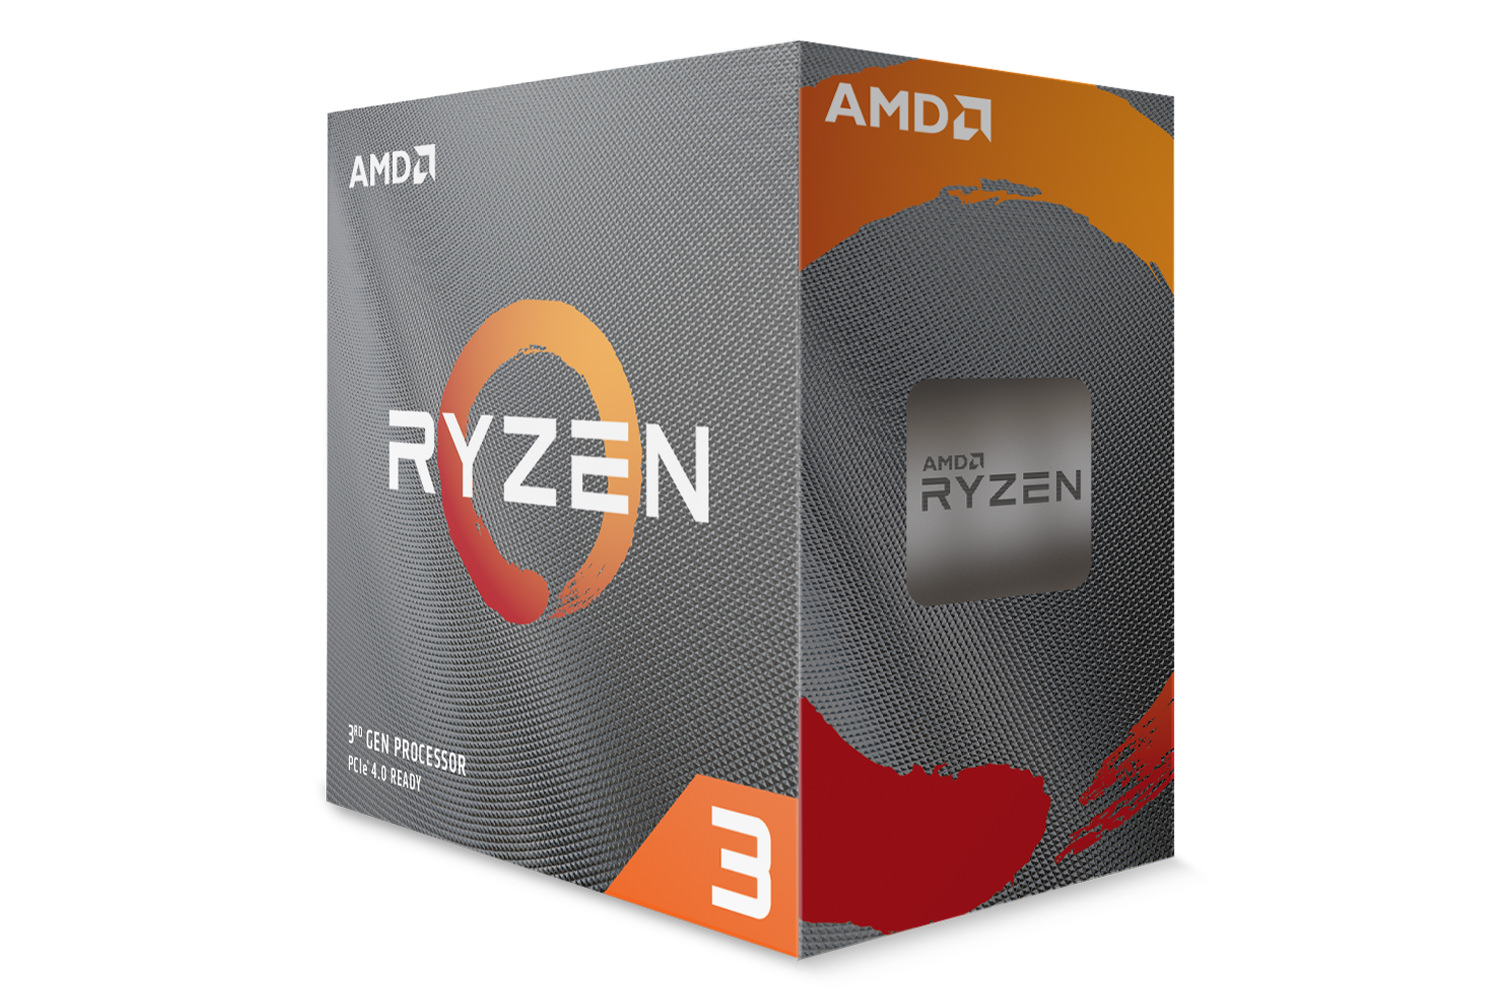 جعبه پردازنده AMD رایزن 3 3100 / AMD Ryzen 3 3100